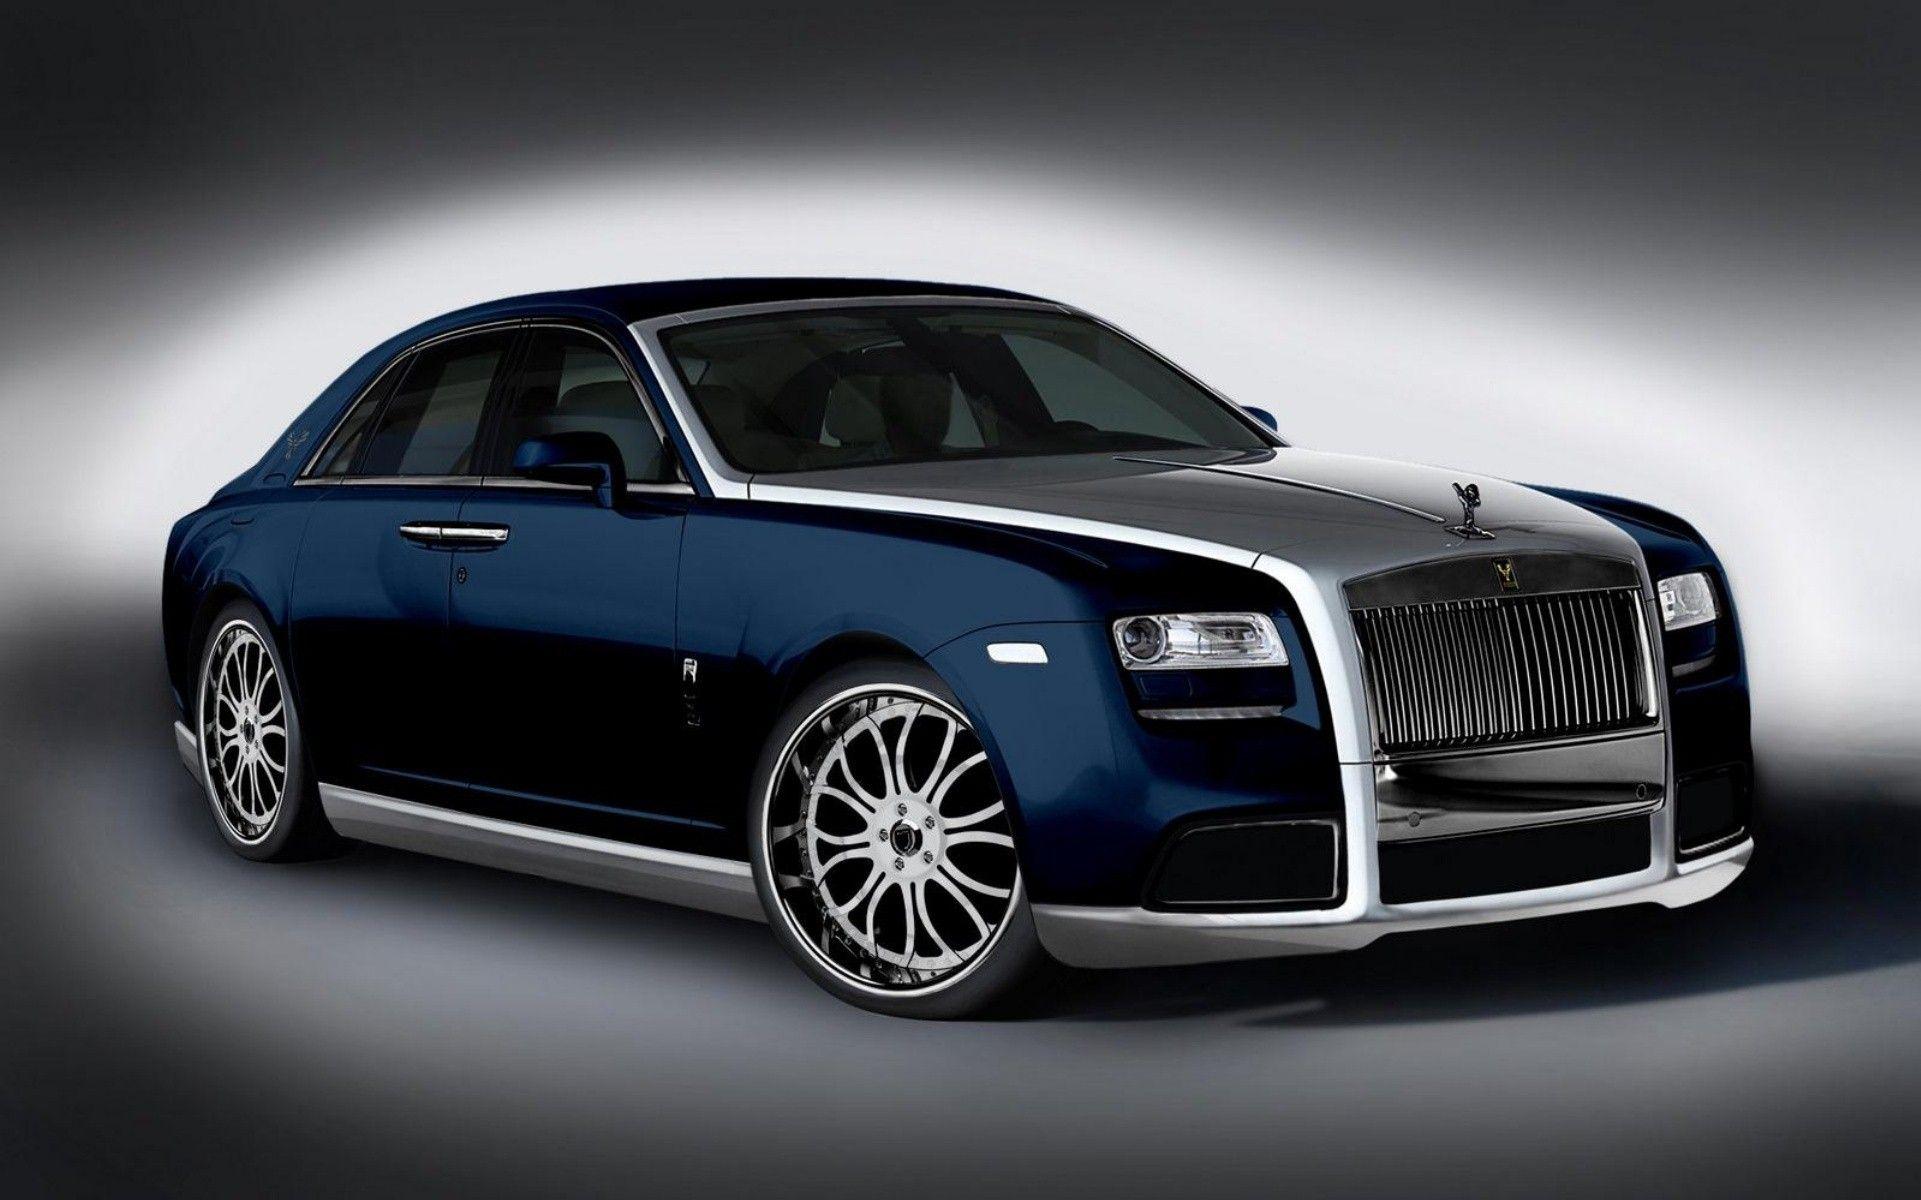 Rolls Royce Cars Wallpaper. Free Download HD Latest Motors Image